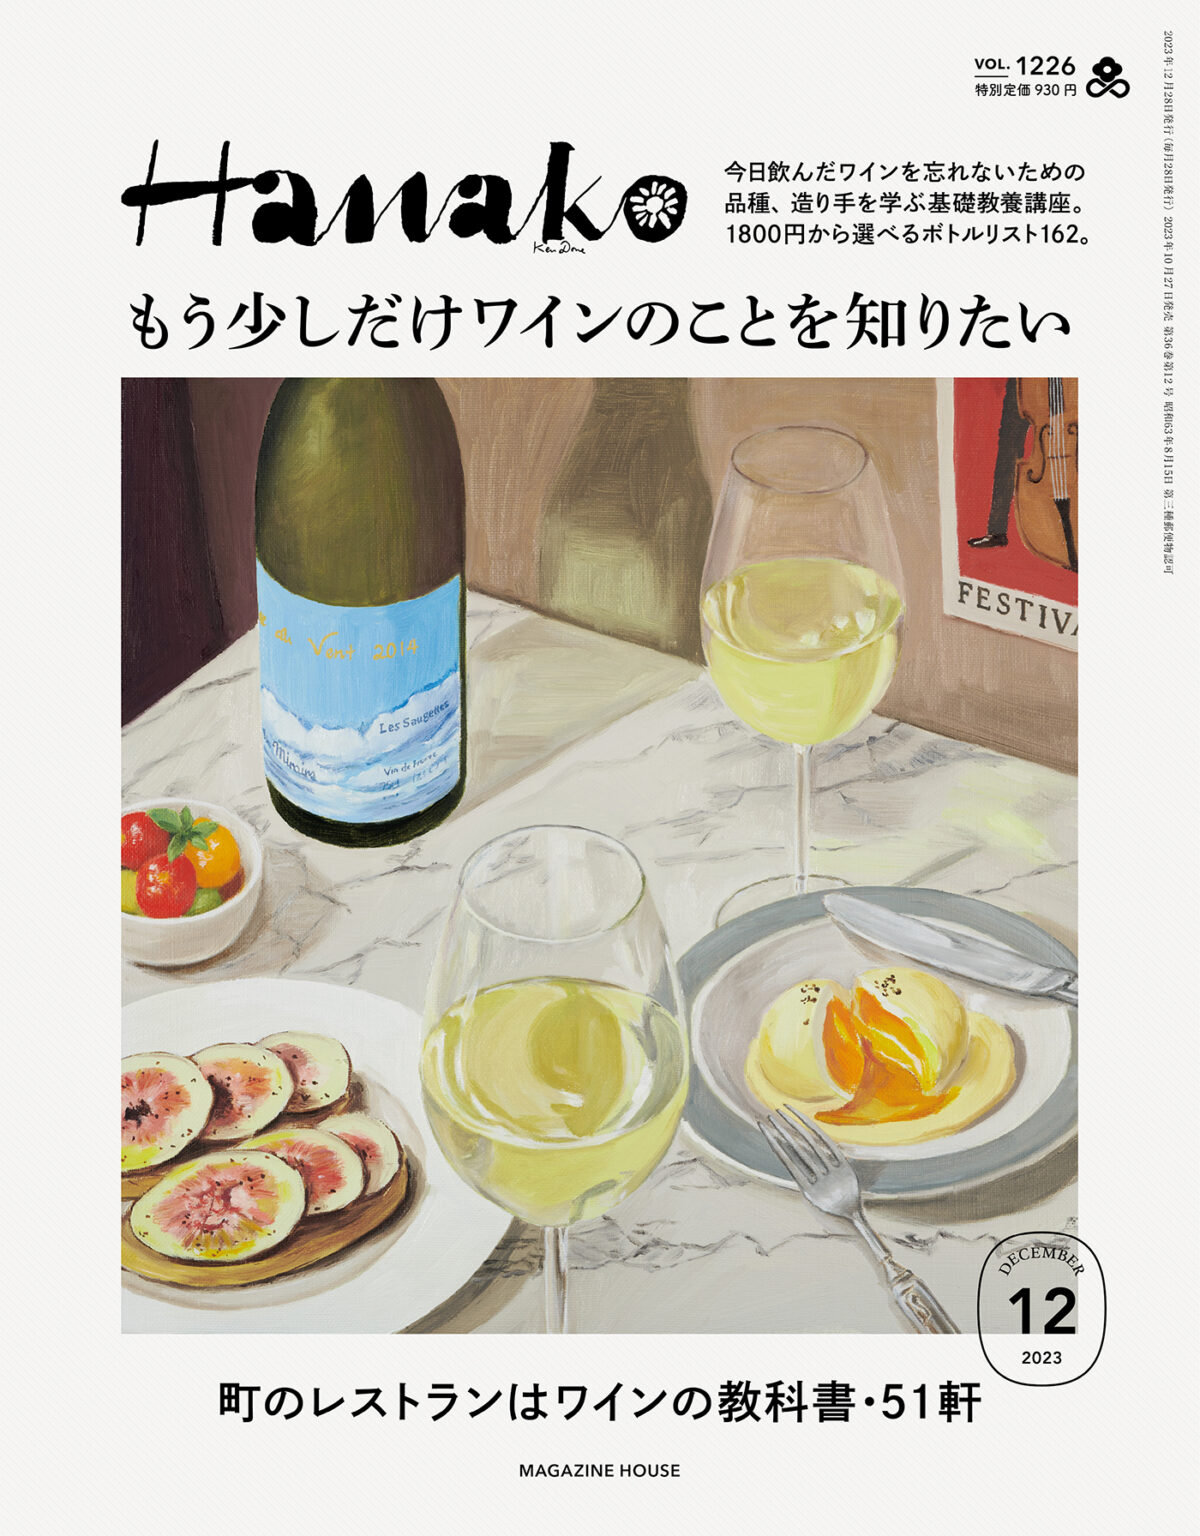 『Hanako』12月号特集「もう少しだけワインのことを知りたい」編集後記